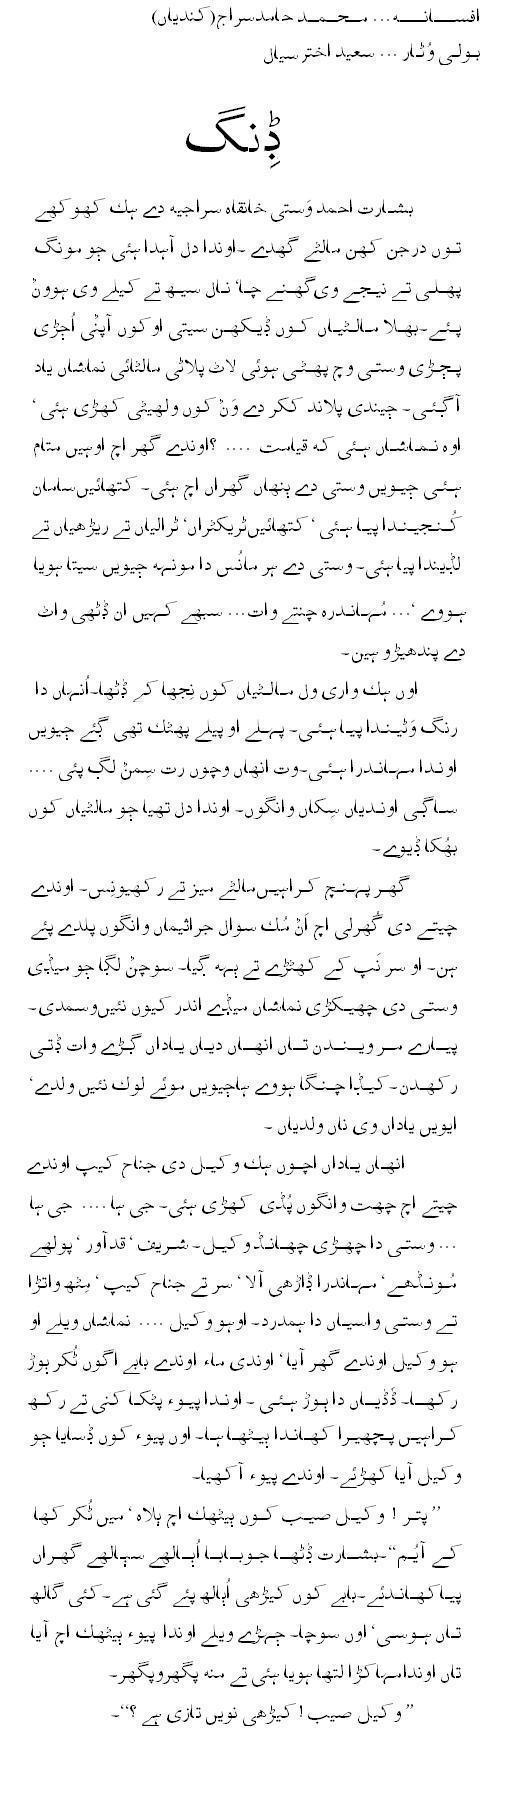 Dding (Hamid Siraj/ Translator Saeed Akhtar Zia) - Part 1